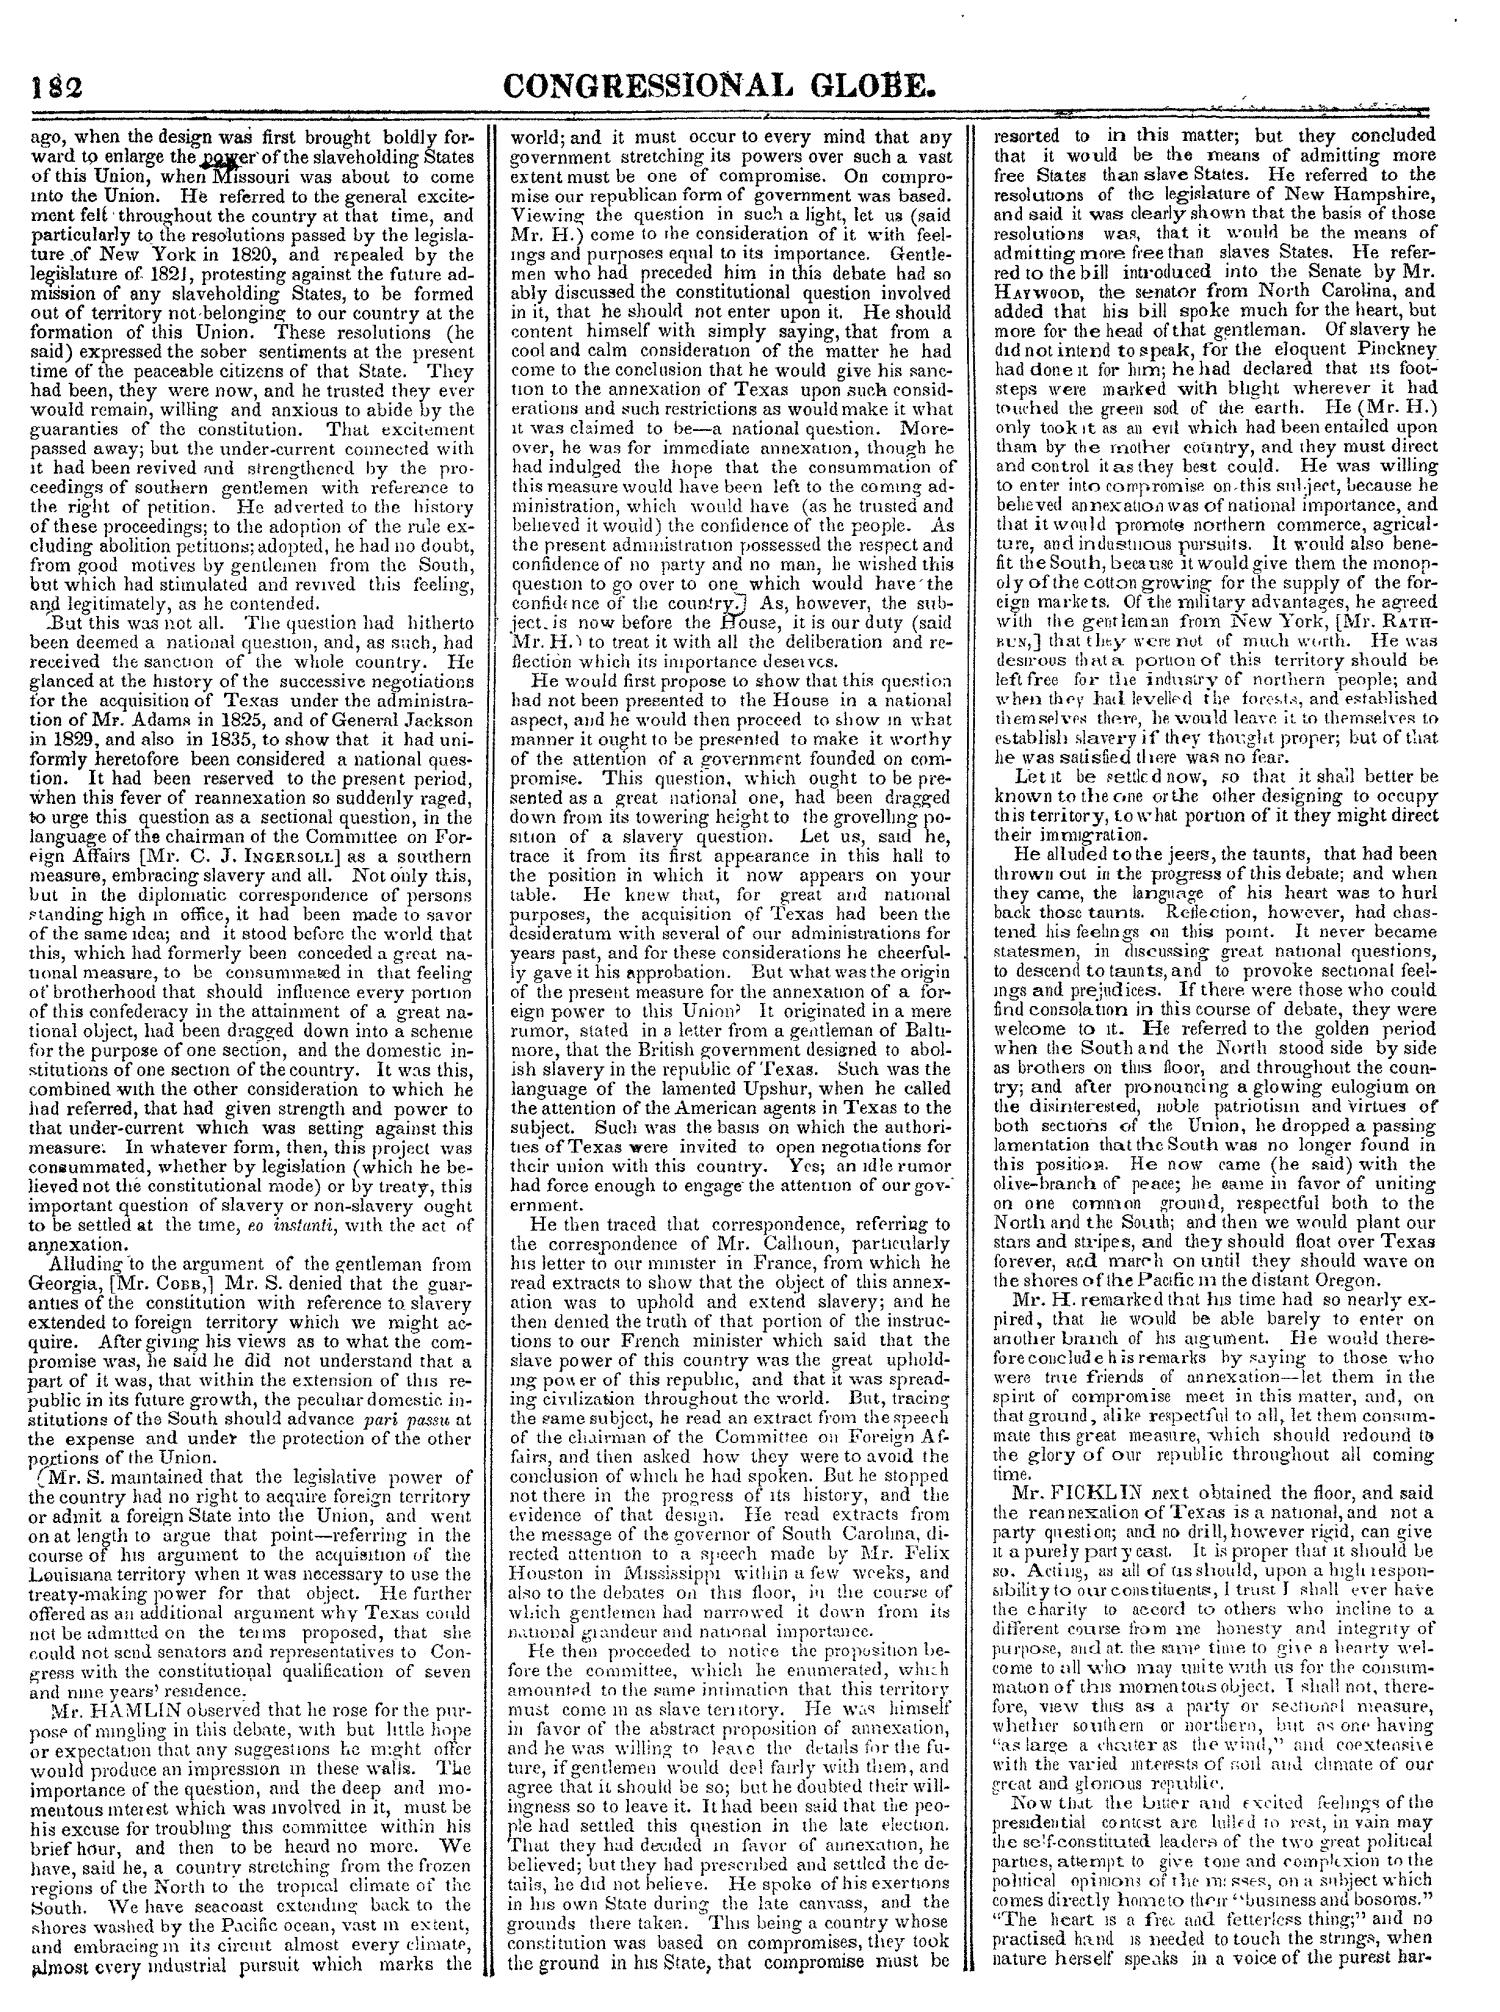 The Congressional Globe, Volume 14: Twenty-Eighth Congress, Second Session
                                                
                                                    182
                                                